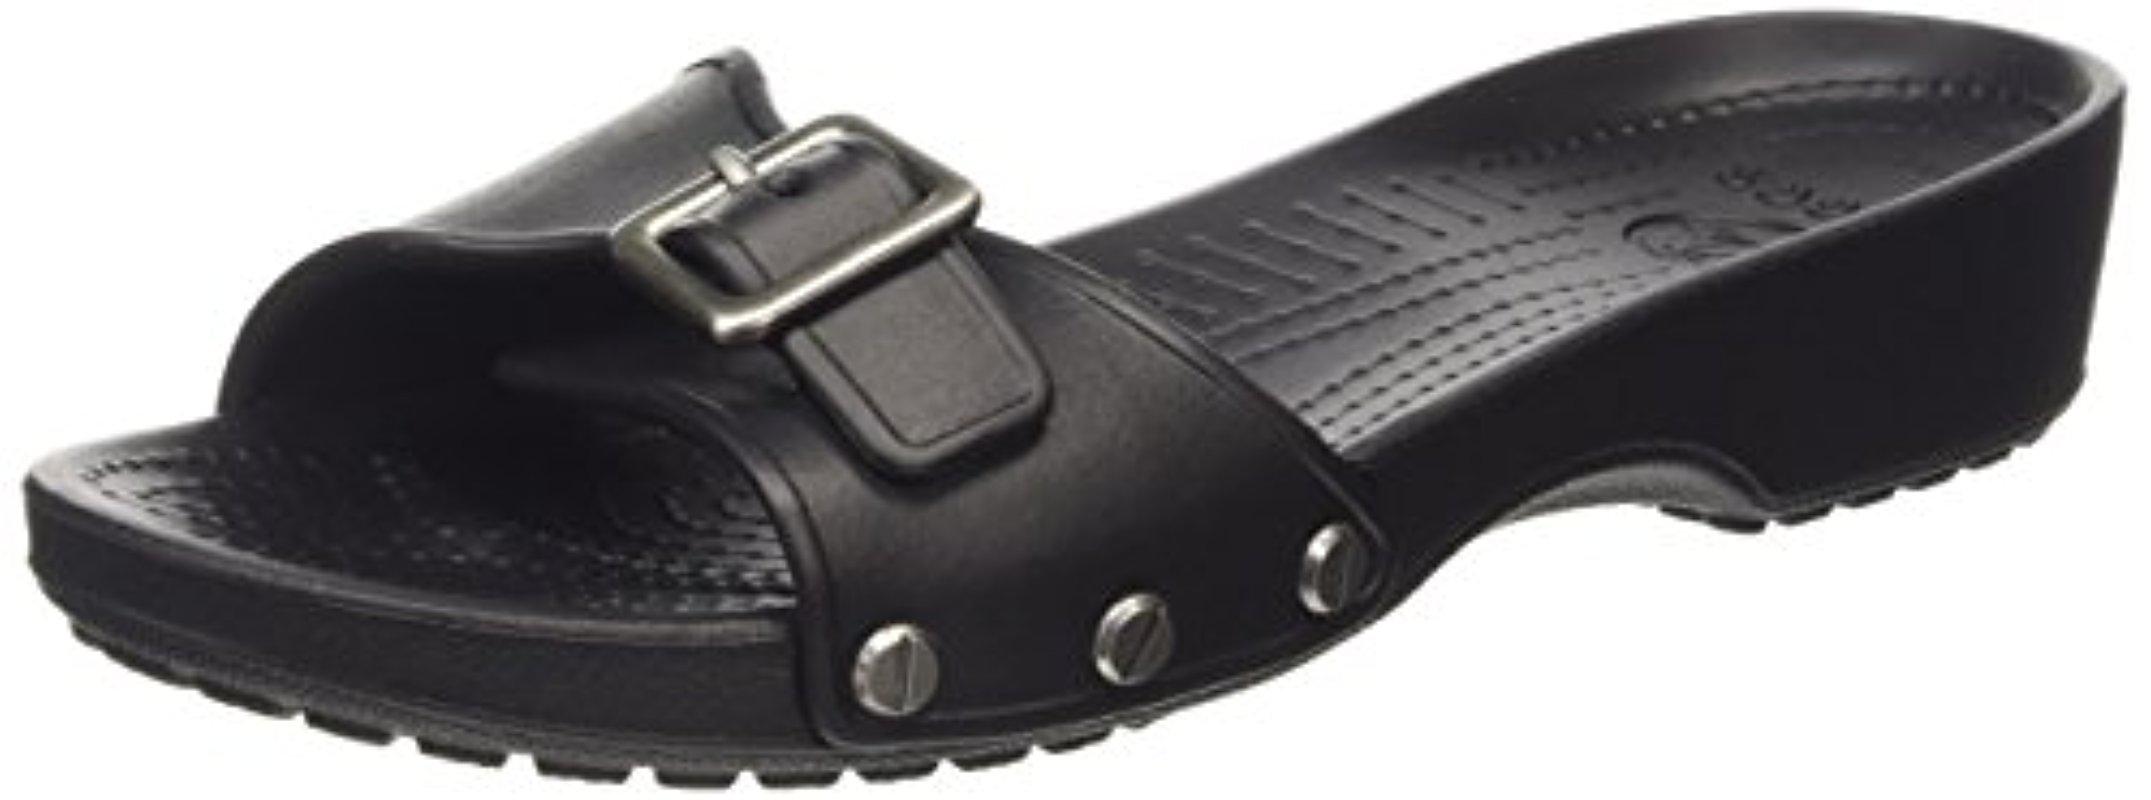 crocs women's sarah w wedge sandal